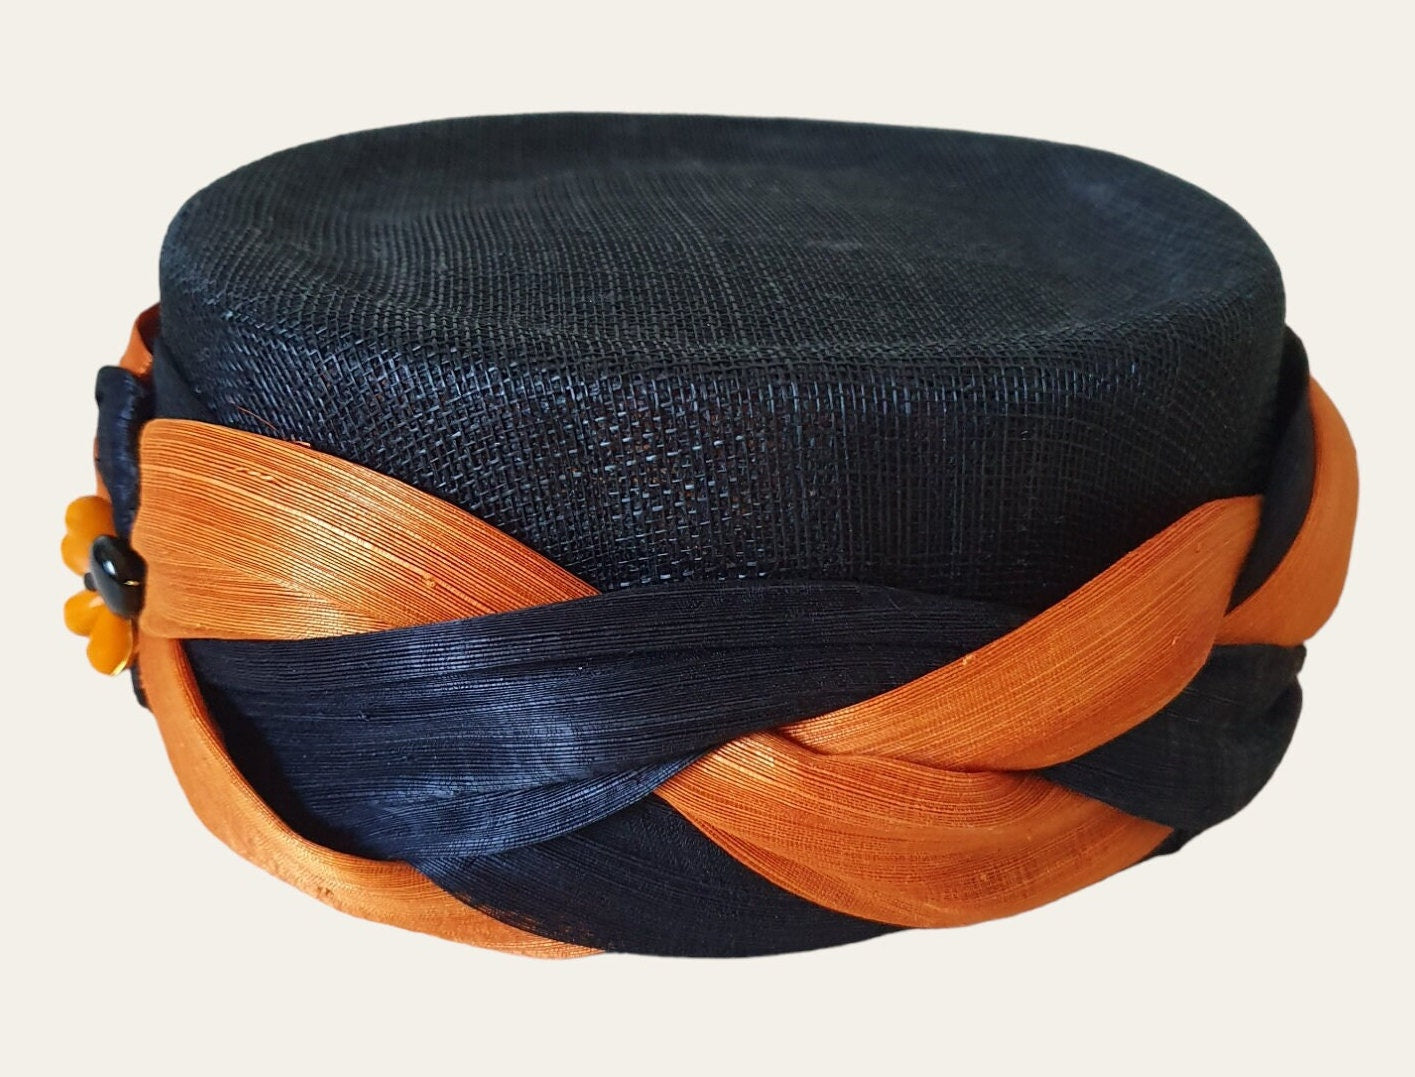 Handgemaakte pillboxhoed van abaca zijde, gast hoofdtooi, elegante hoed, sinamay hoofdtooi, dameshoed, bruiloft, speciale gebeurtenis